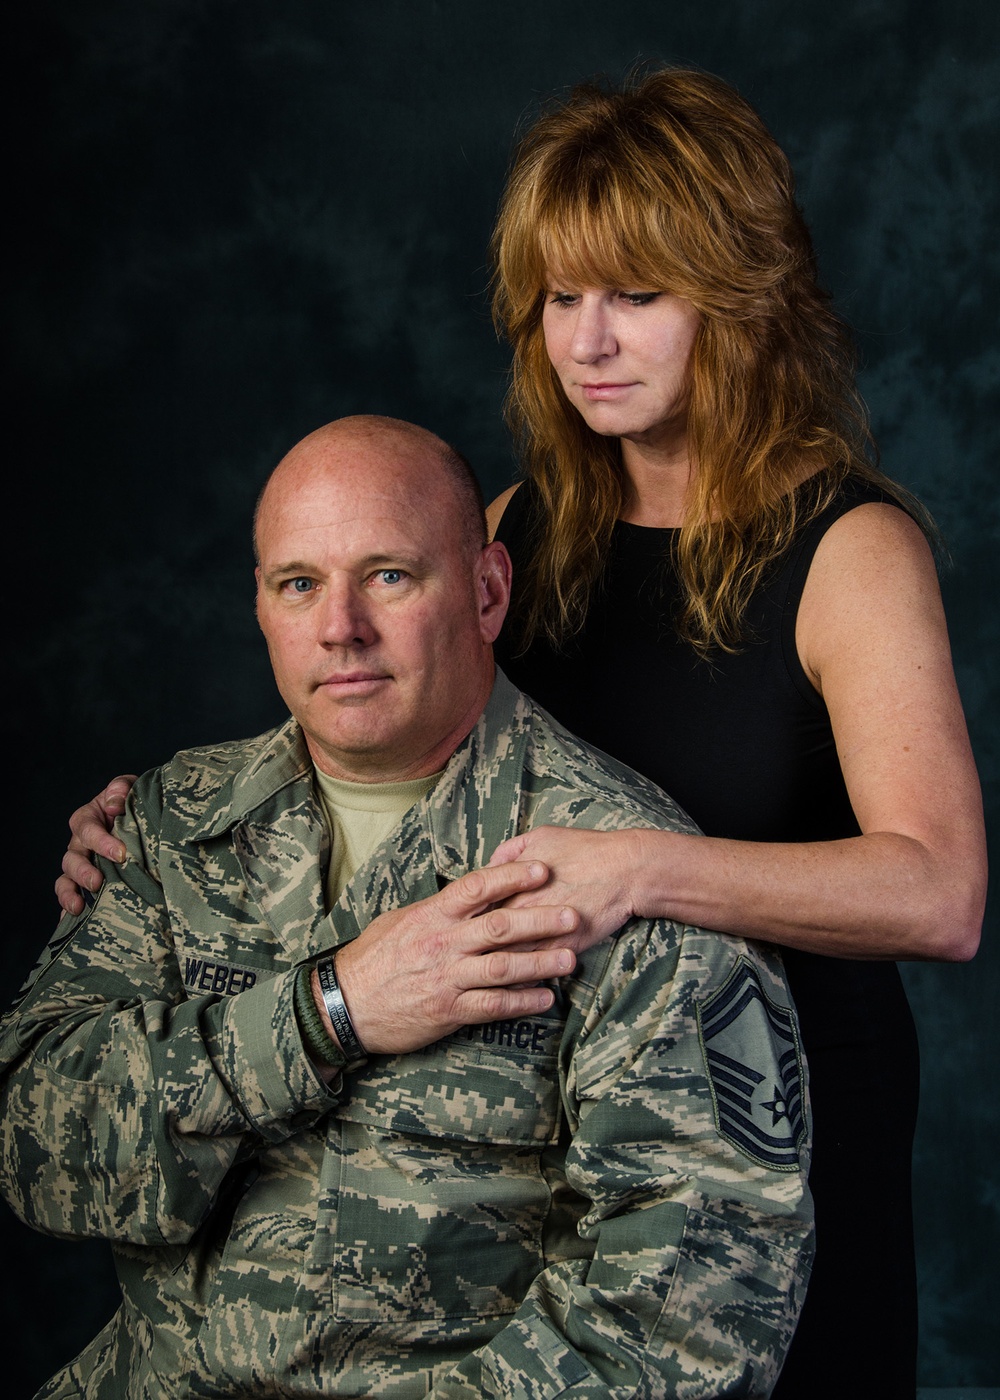 Family bond gets Veteran Airman through PTSD